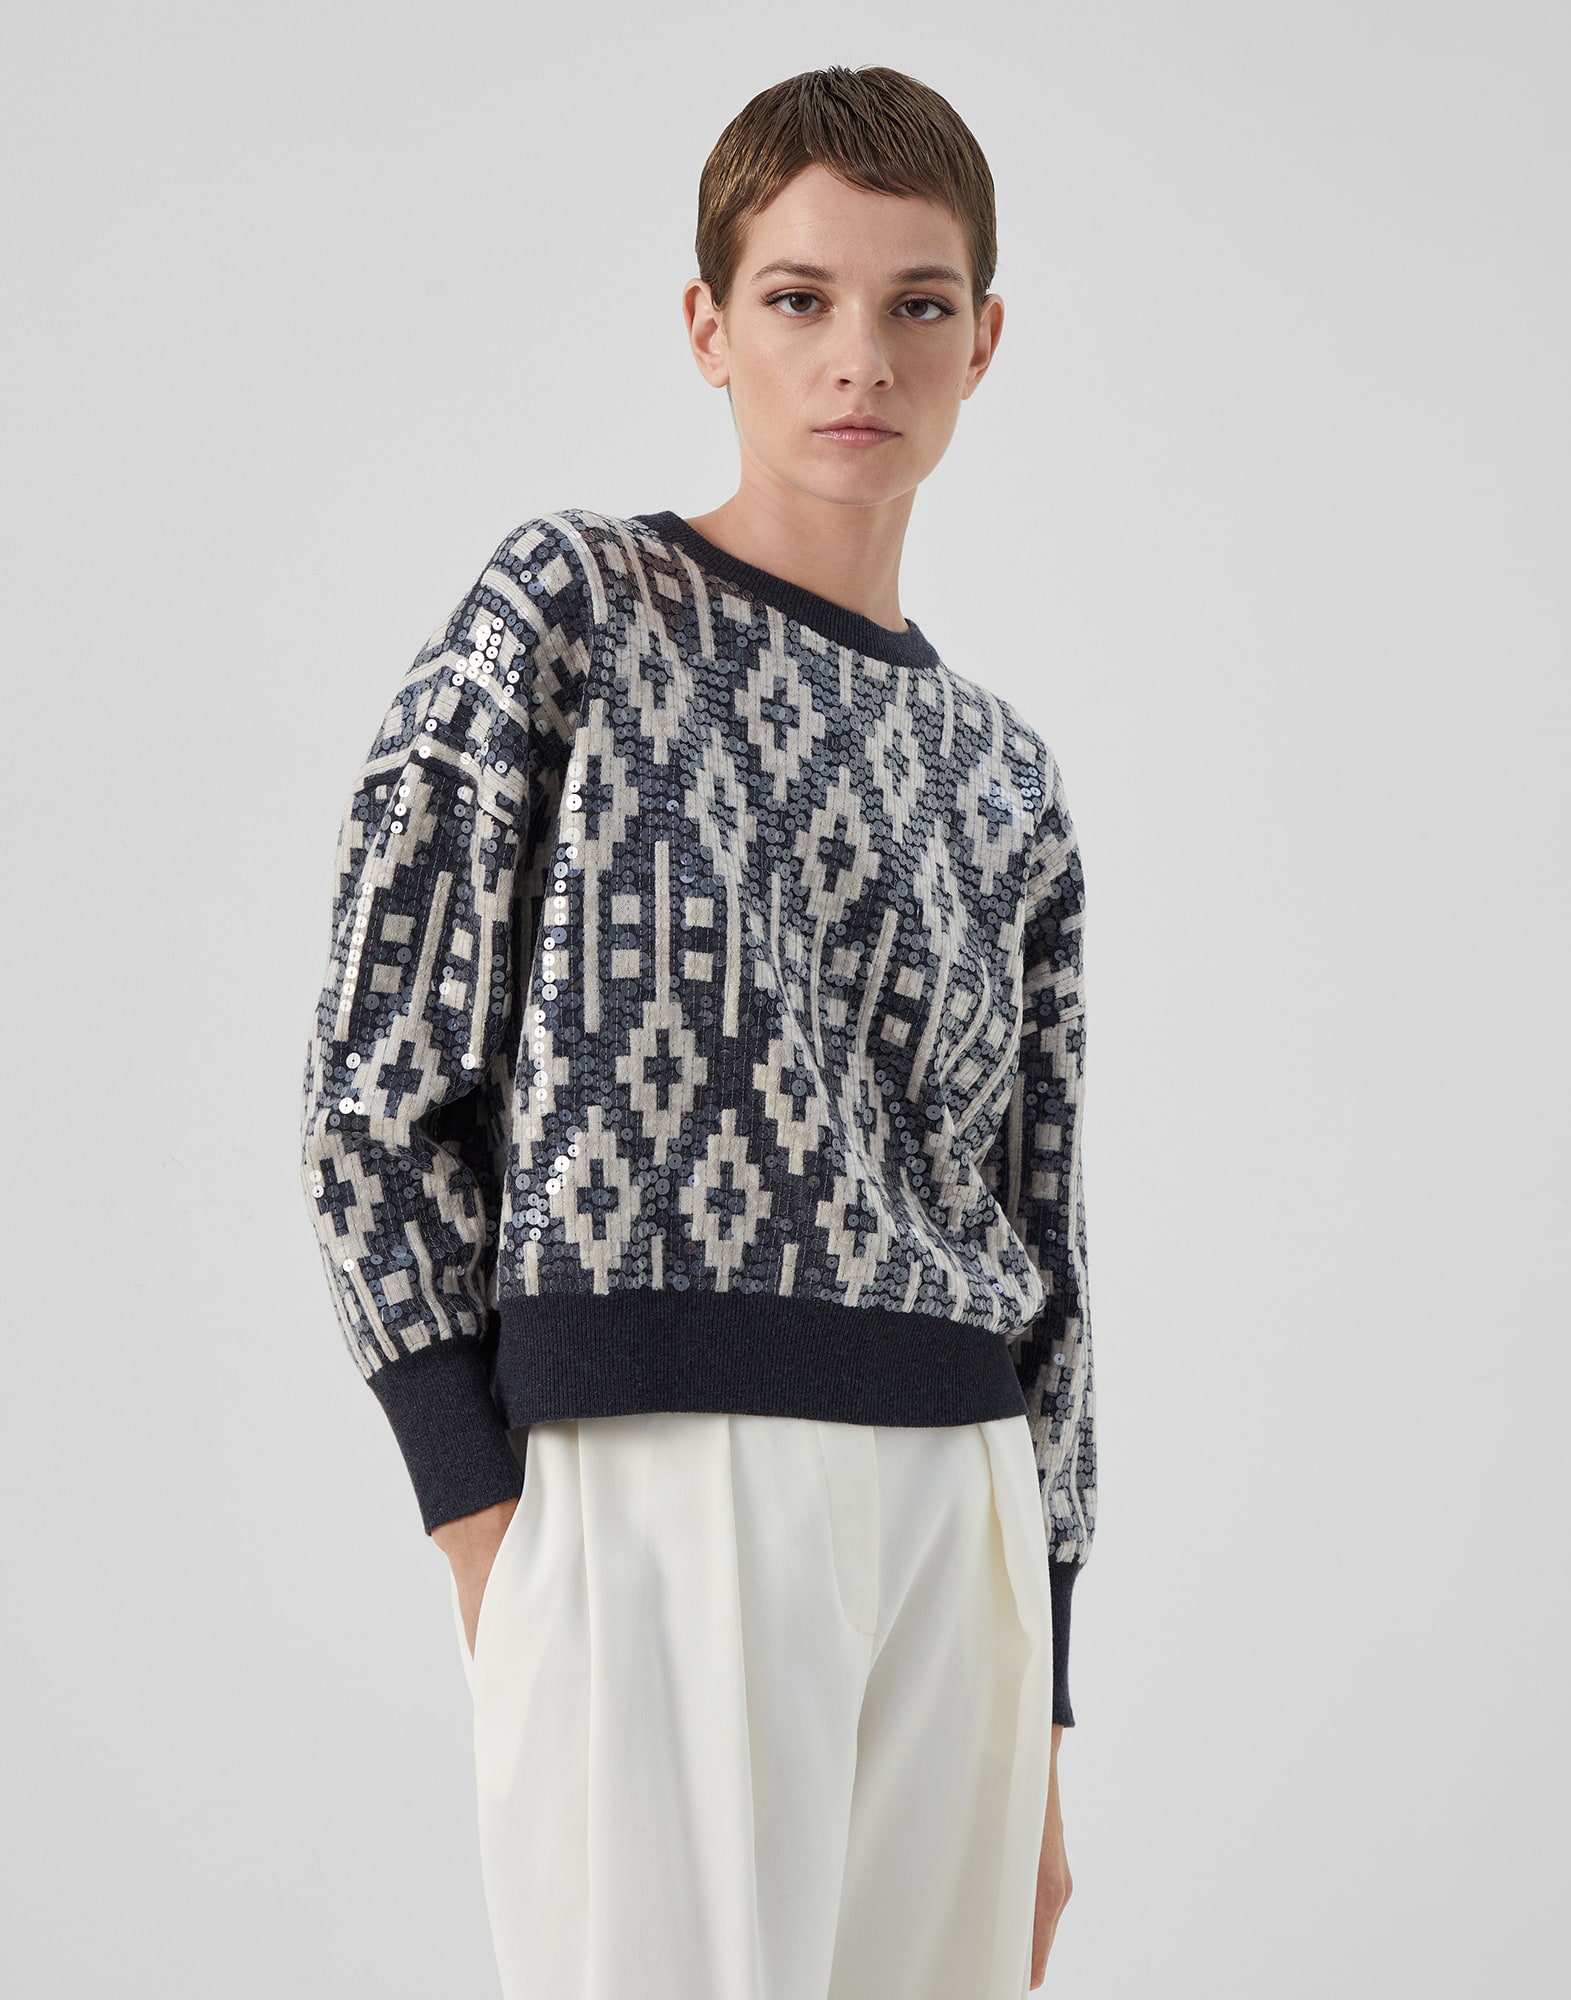 Dazzling Vintage Jacquard Sweater